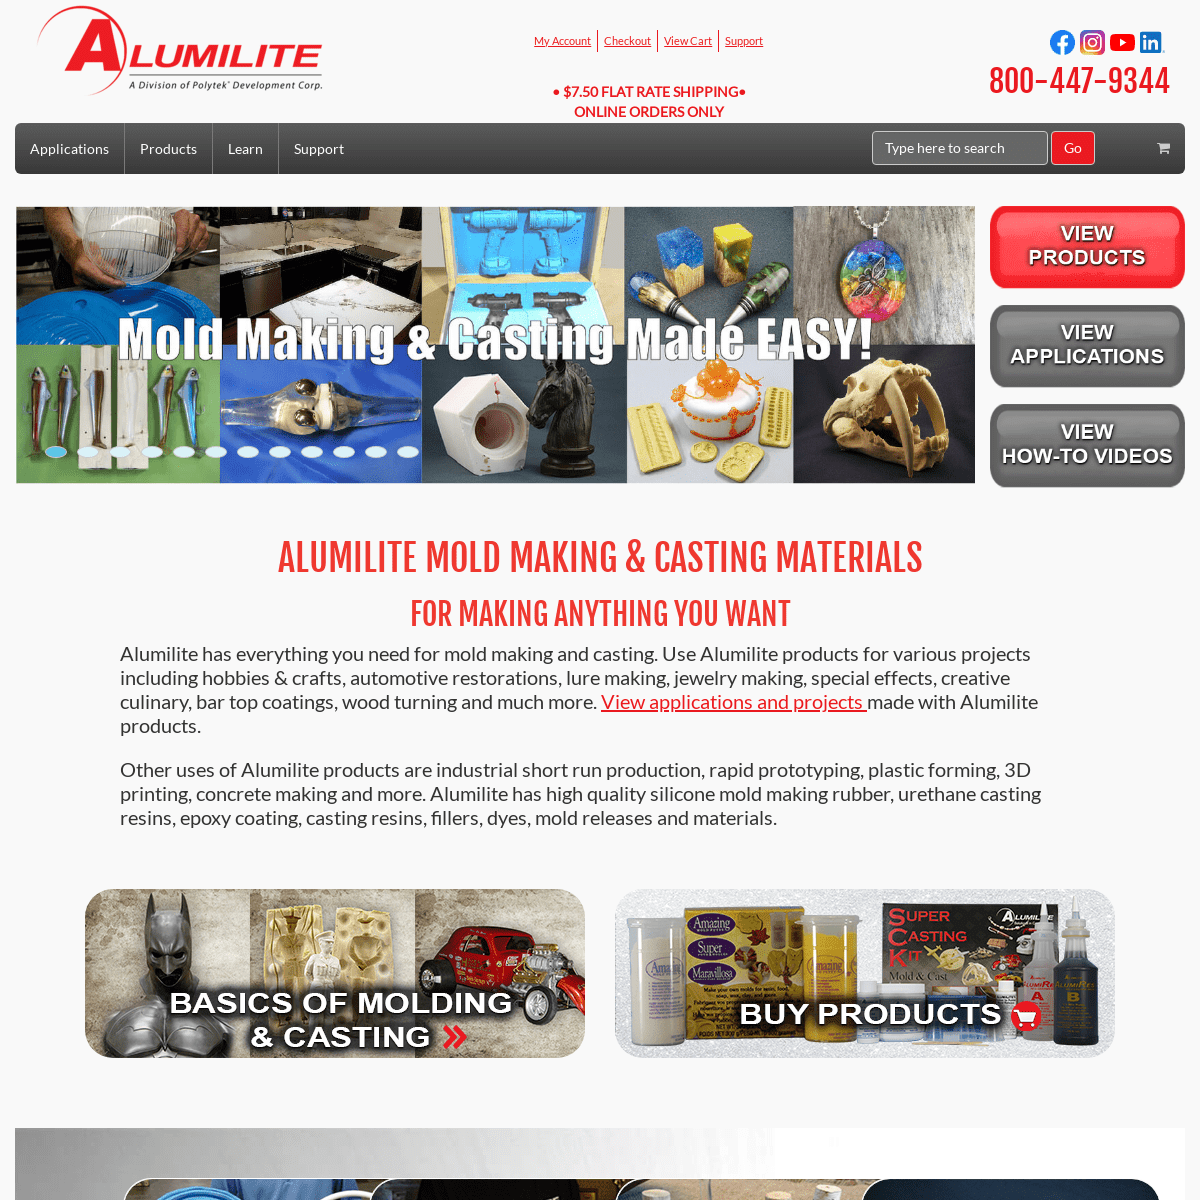 A complete backup of alumilite.com